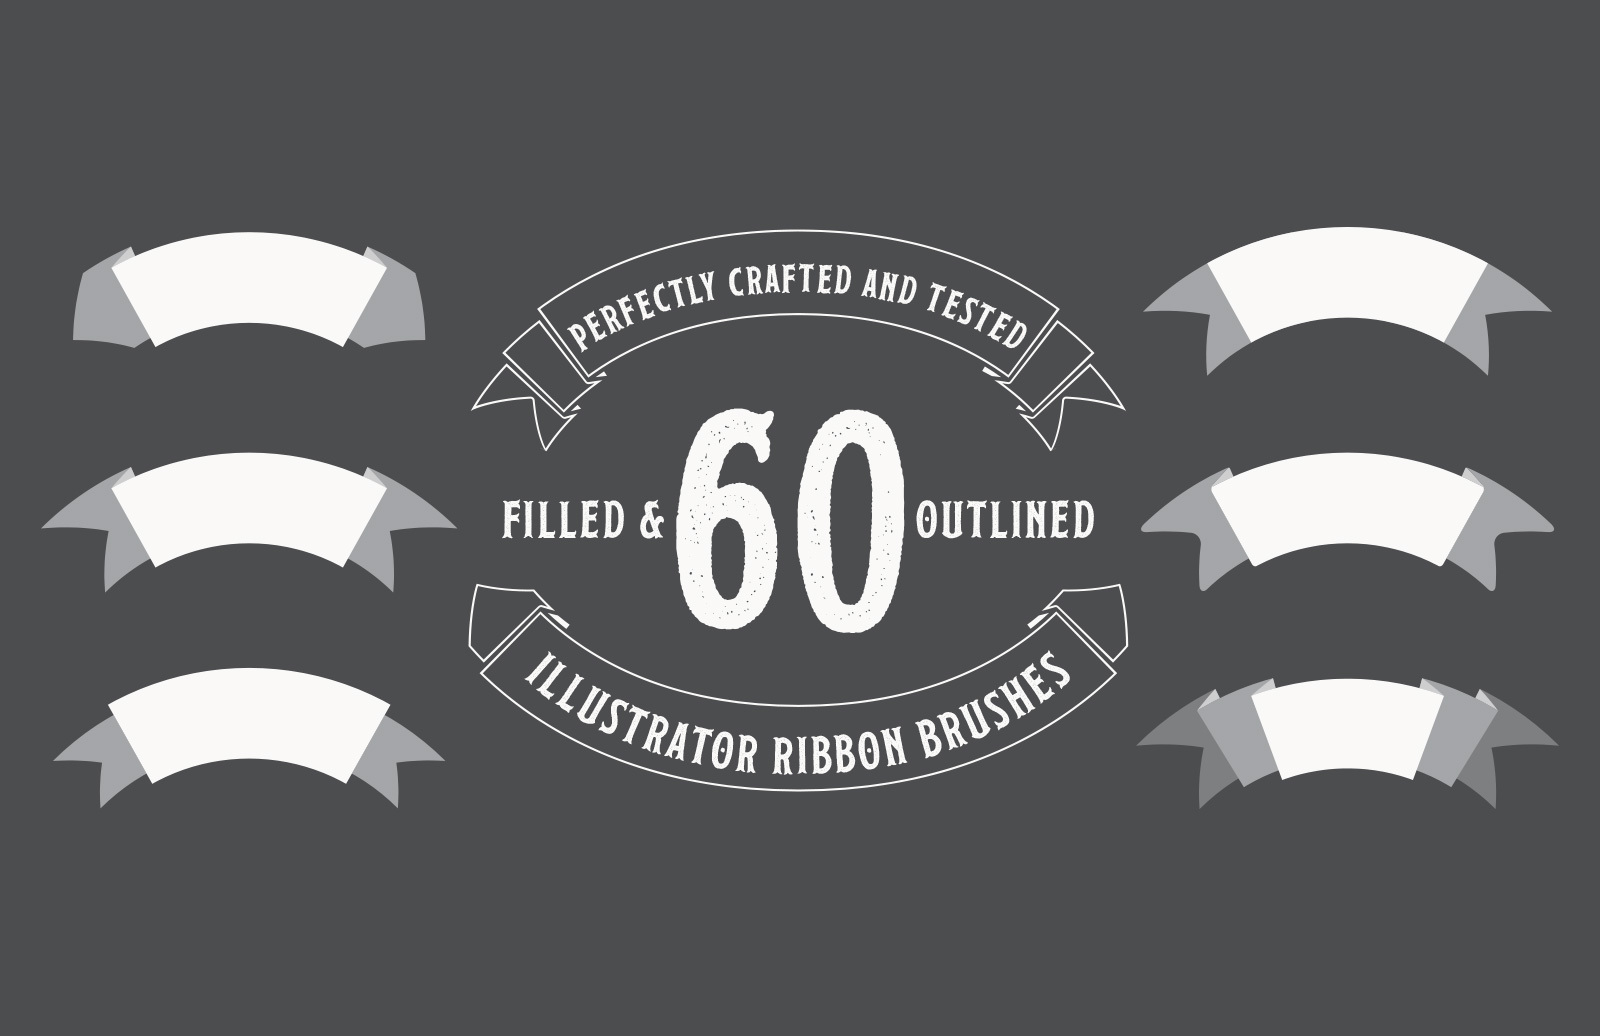 60 Illustrator Ribbon Brushes Medialoot